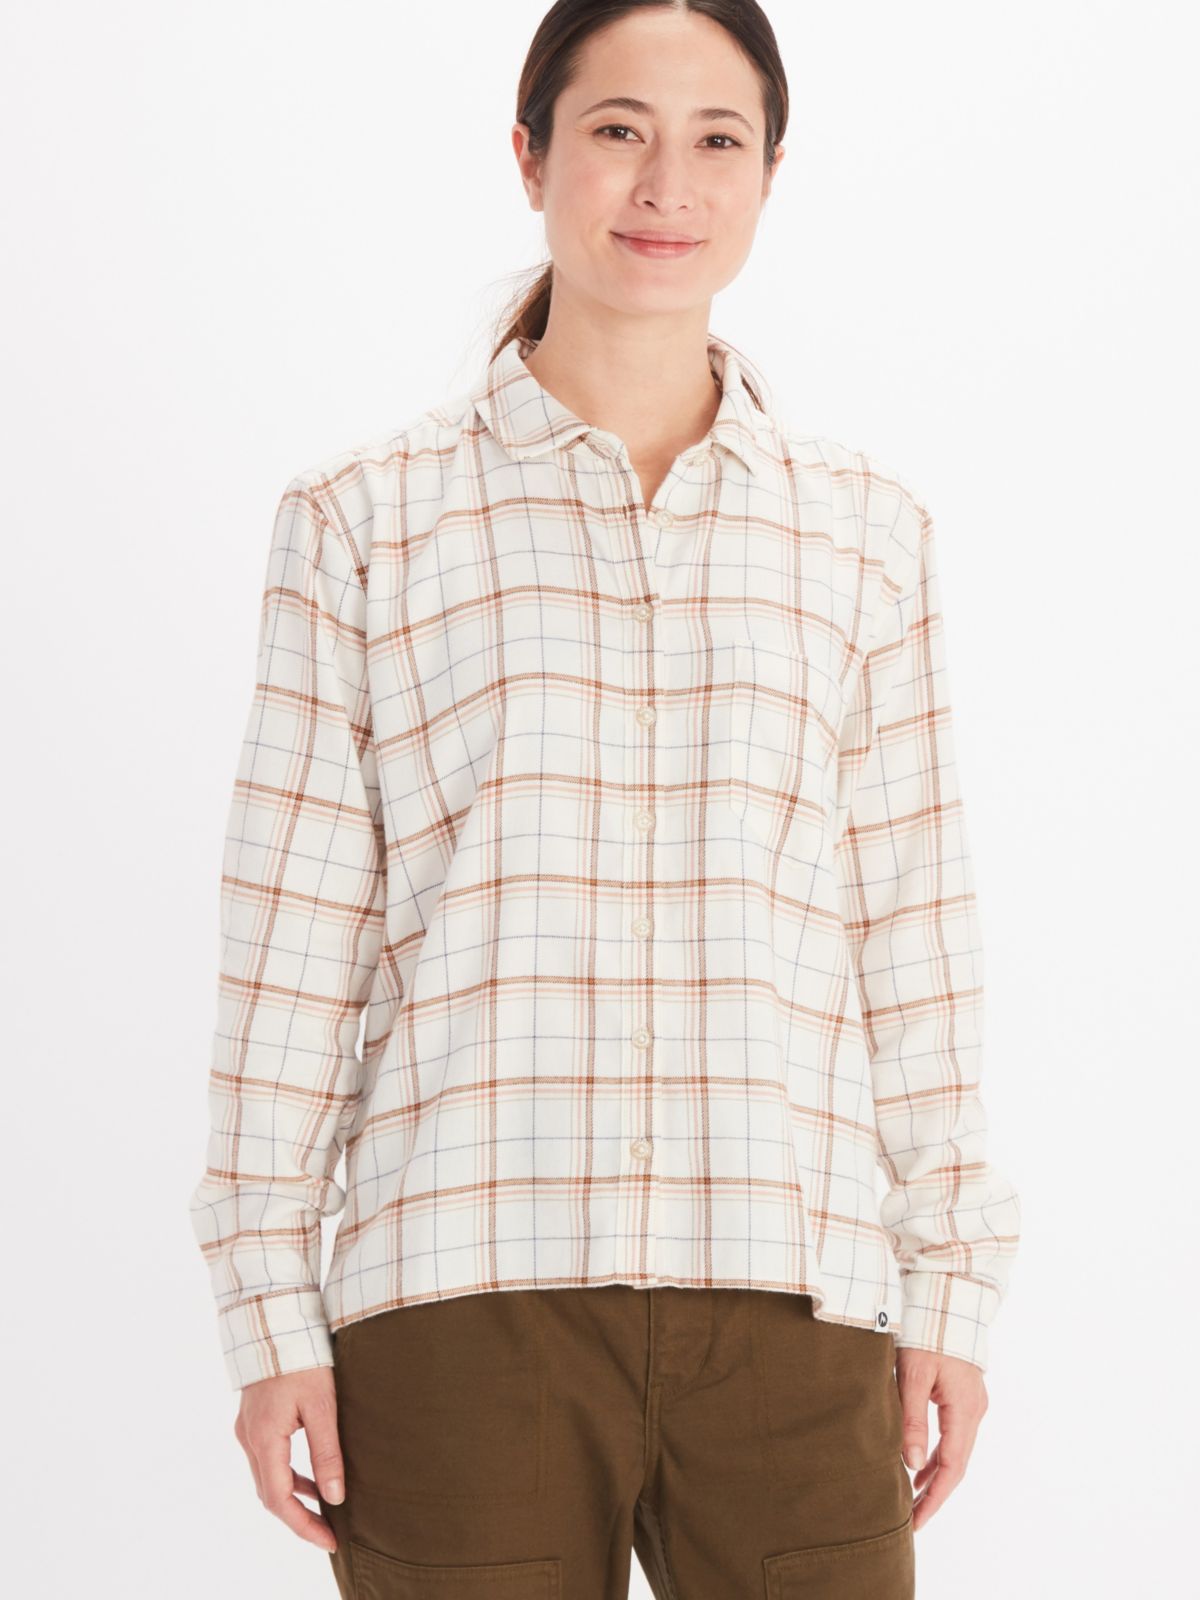 Model wearing Marmot women's long sleeve plaid shirt